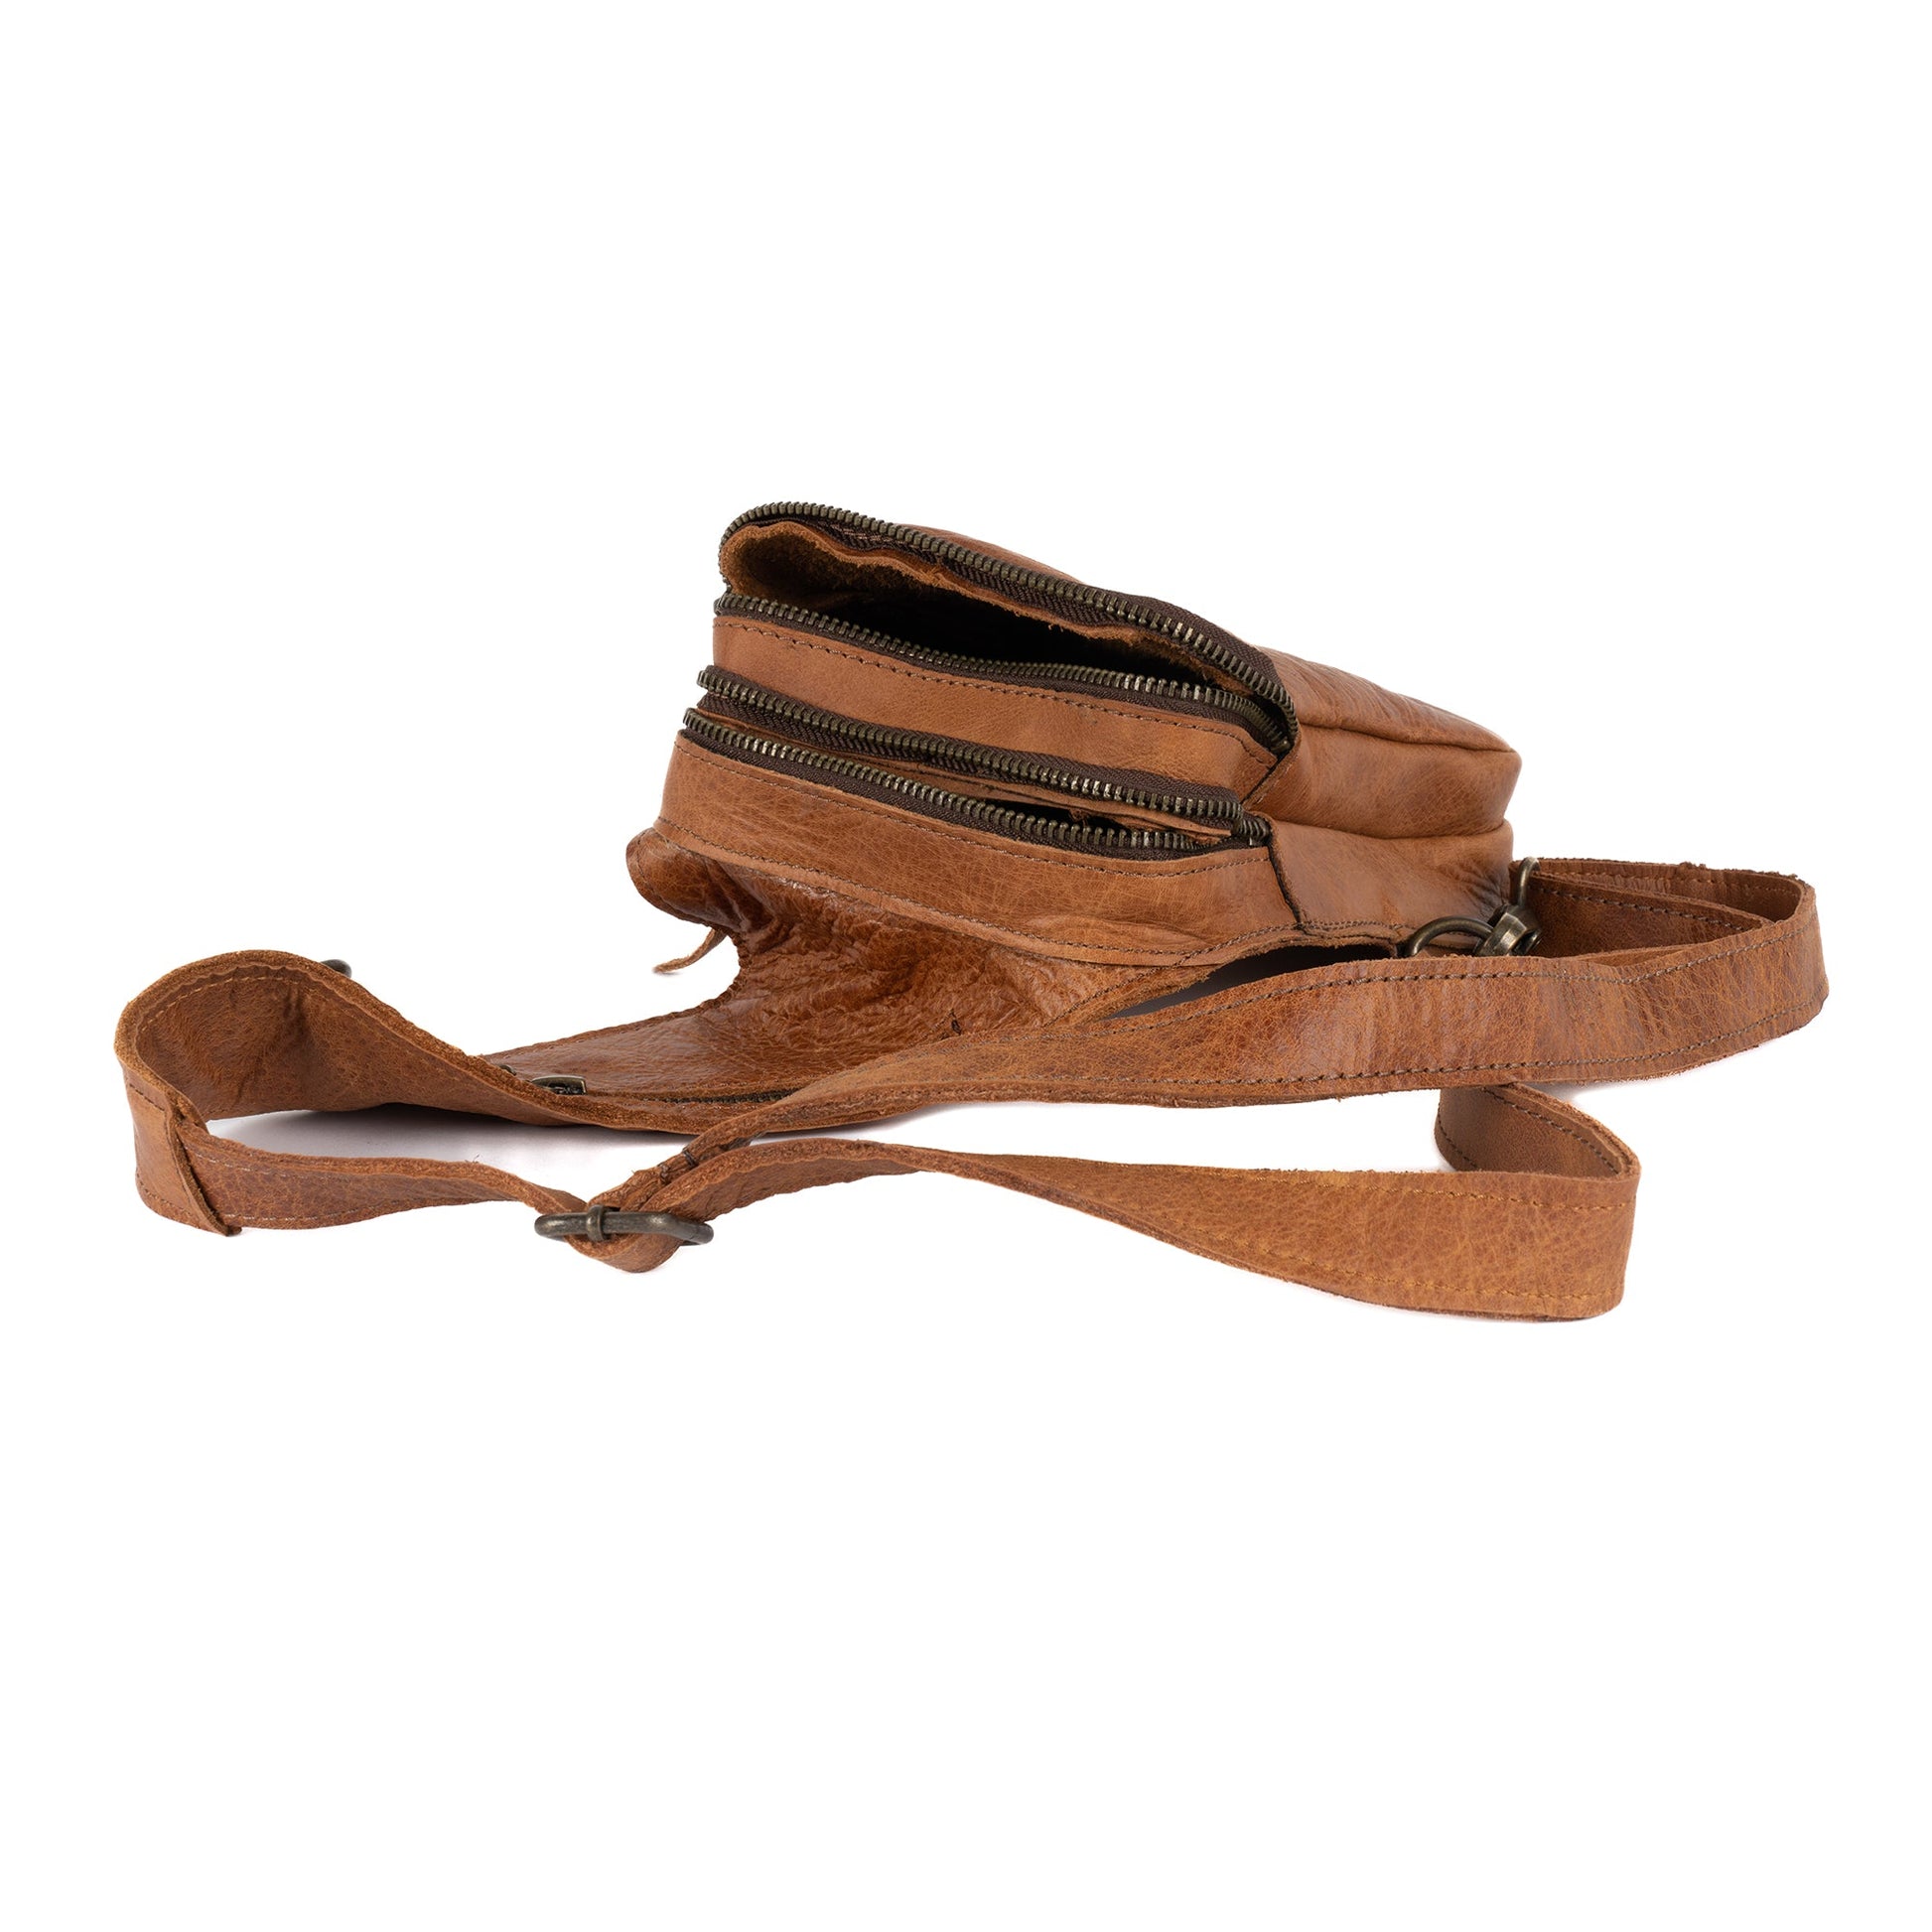 Sardis Leather Crossbody Bag - Bags Zengoda Shop online from Artisan Brands